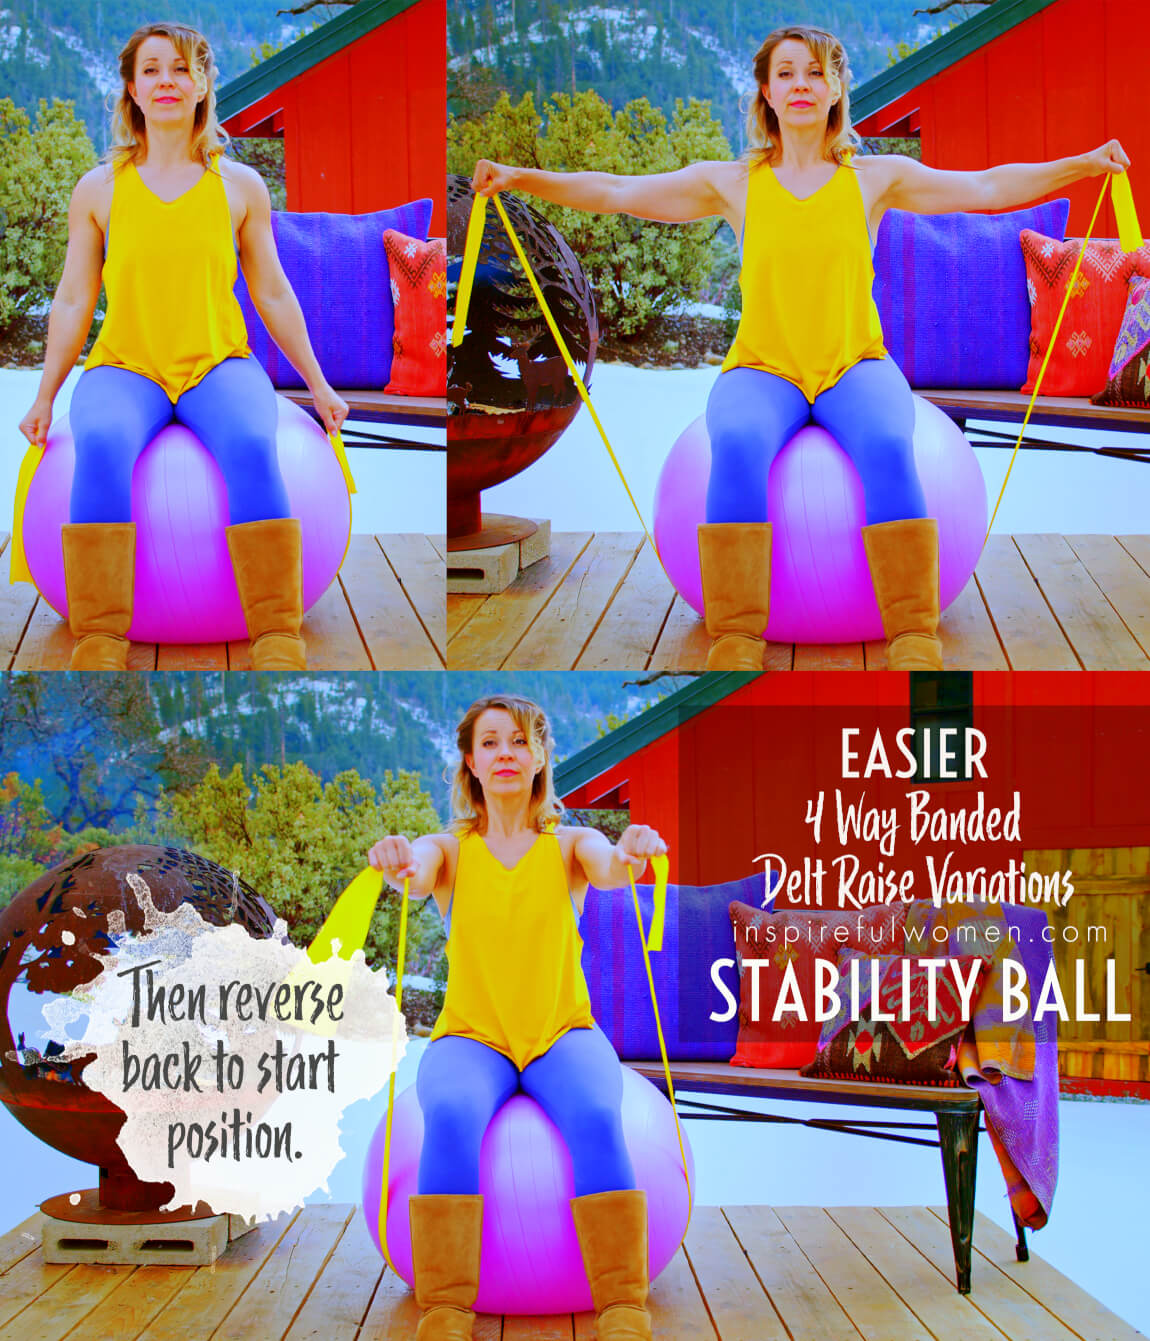 stability-ball-4-way-banded-delt-raise-shoulder-exercise-variation-easier